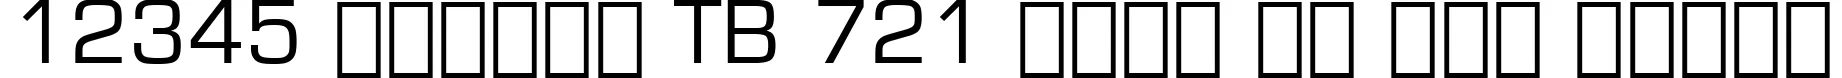 Dynamic Square 721 BT Font Preview https://safirsoft.com